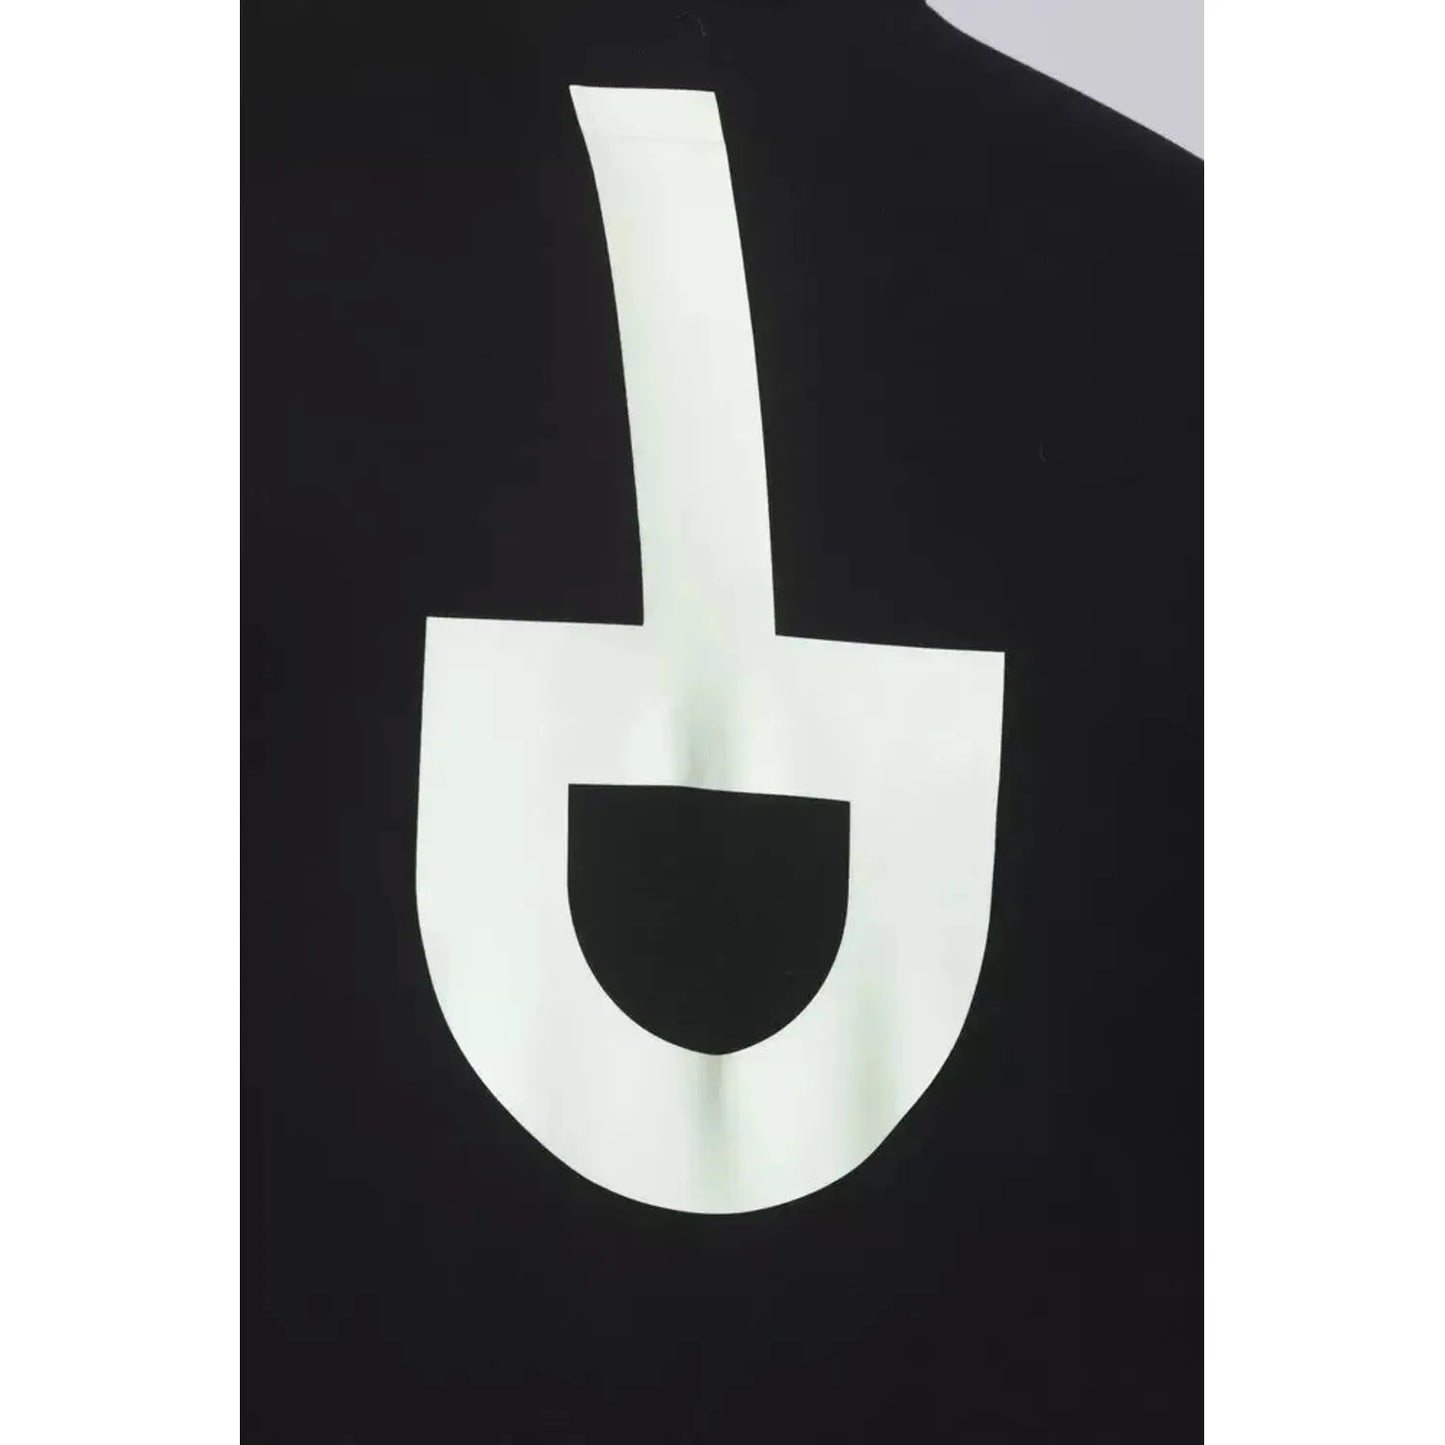 Tond Glowing Oversized Short Sleeve Tee black-cotton-t-shirt-16